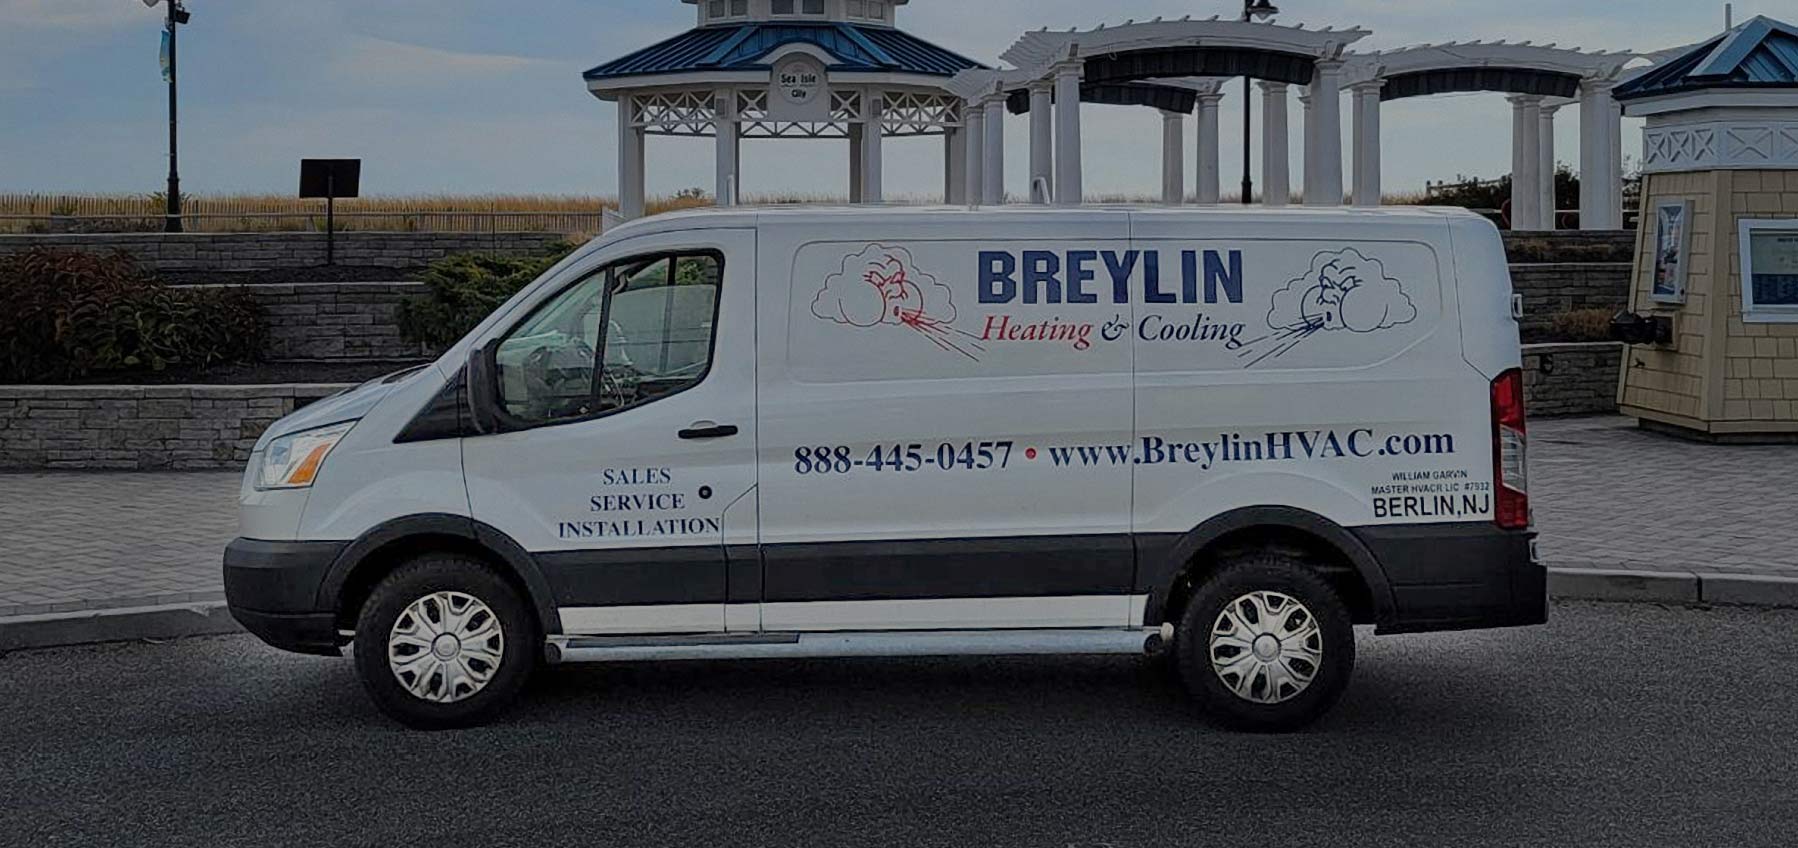 Breylin Heating & Cooling | Camden County NJ Heater Air Conditioner HVAC Service